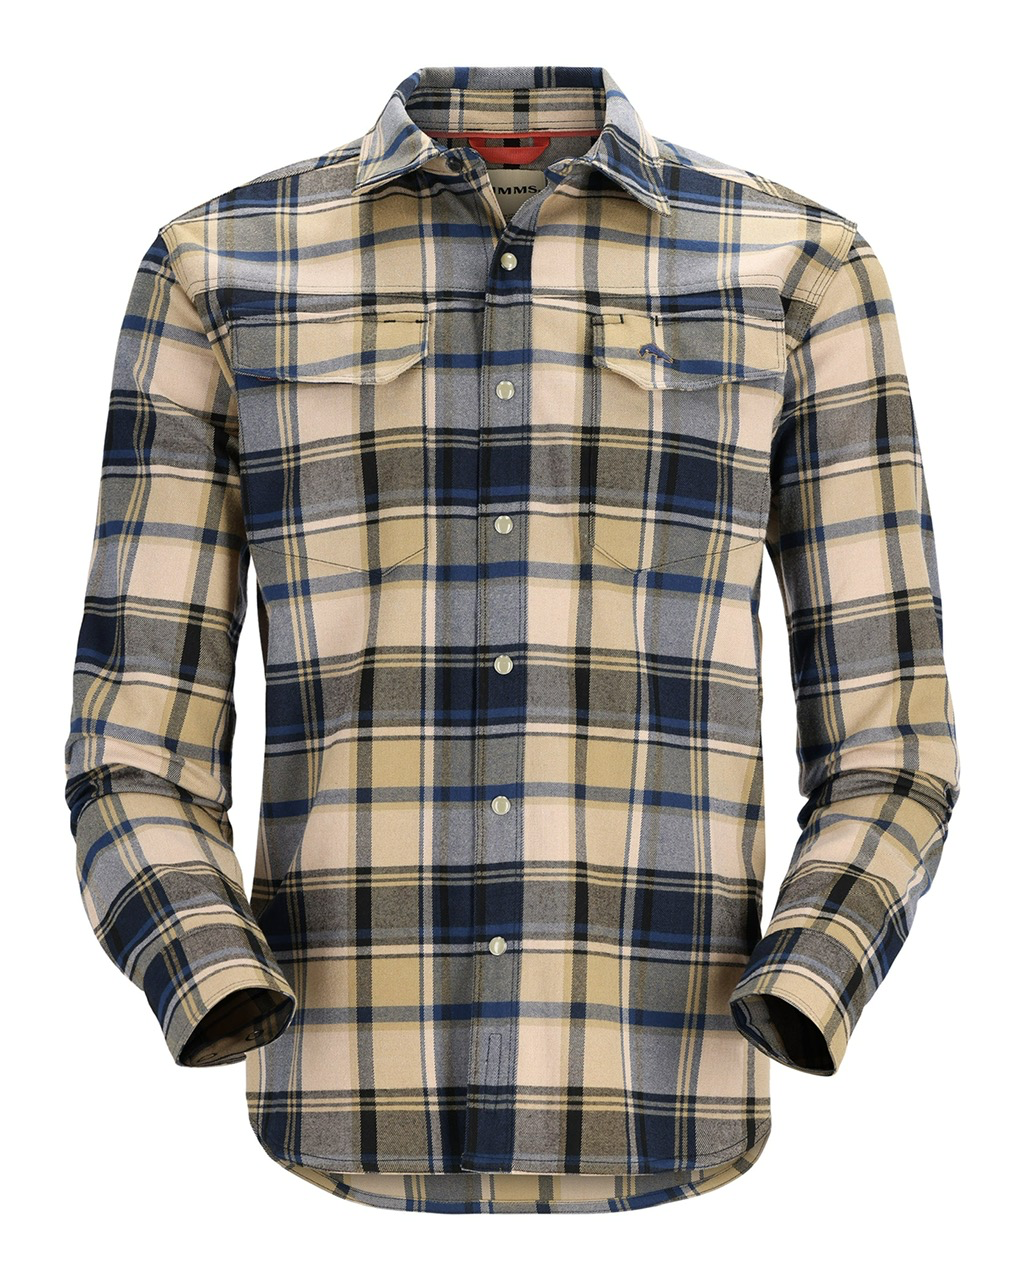 Simms M's Gallatin Flannel LS Shirt - Camel/Navy Woodsman Plaid - Medium